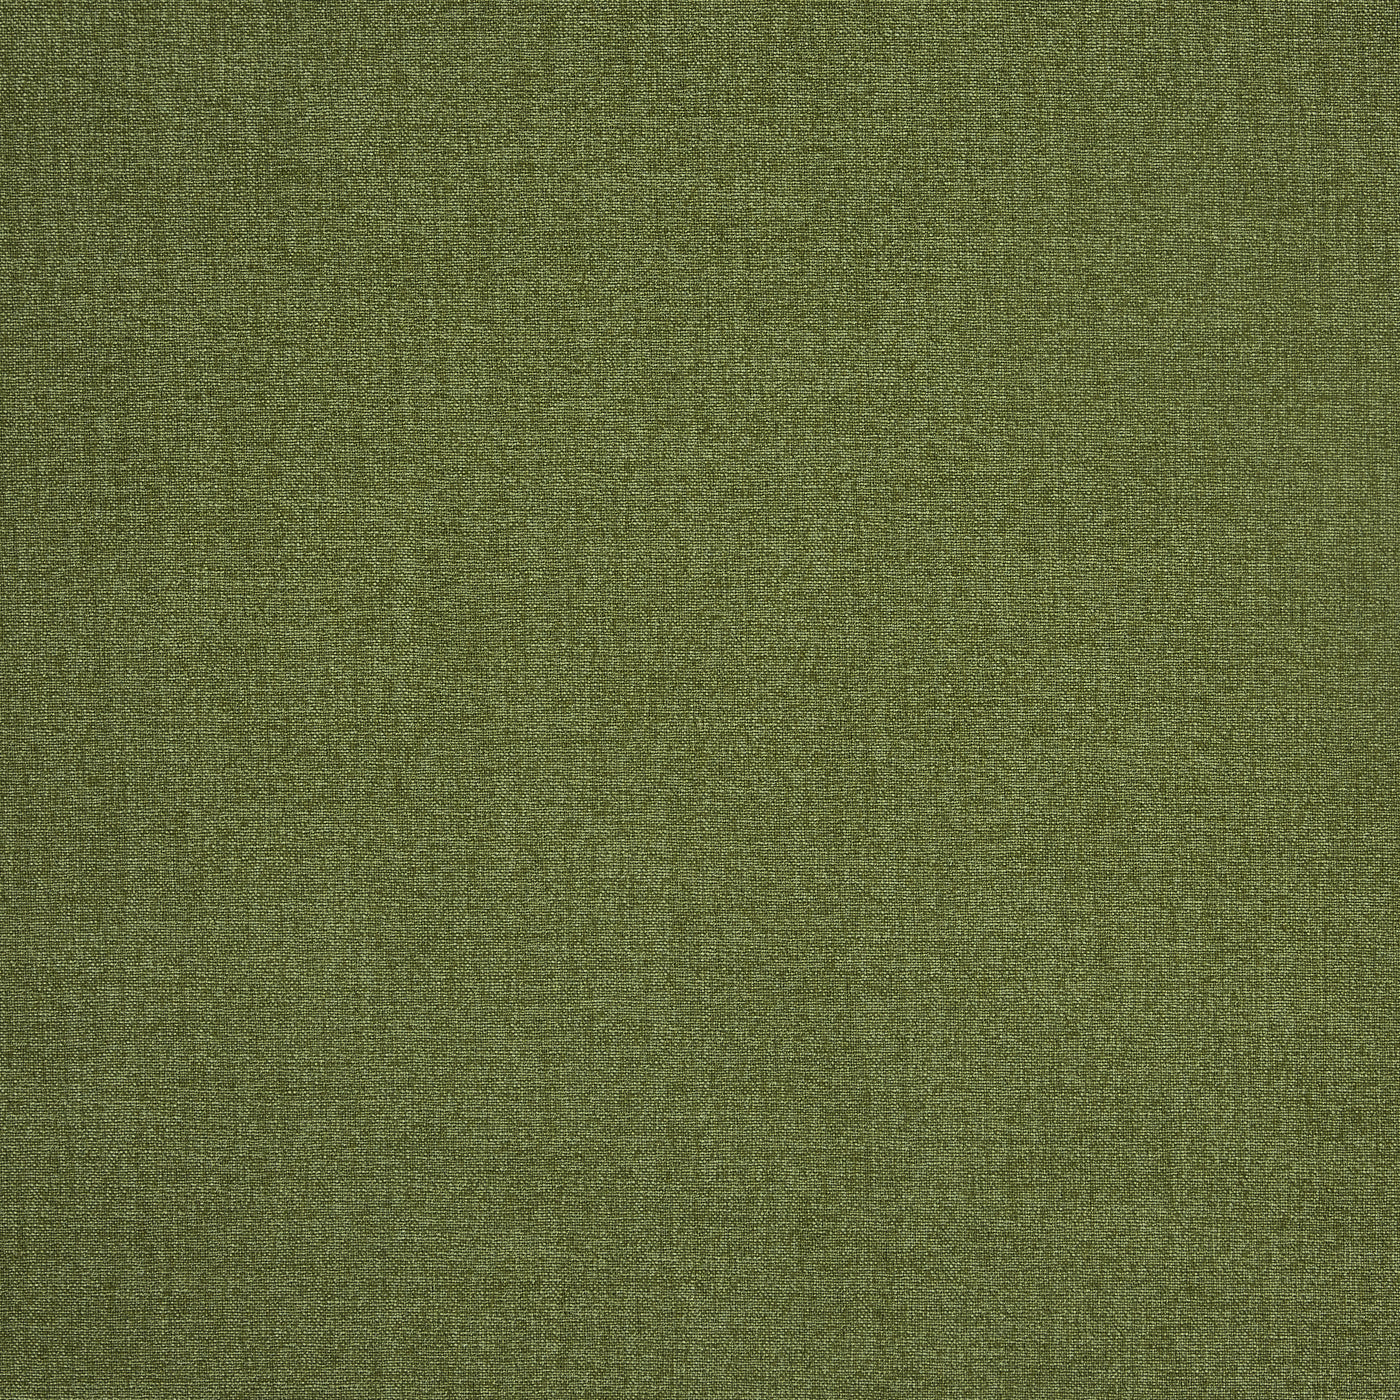 Prestigious Textiles Saxon Fabric Olive